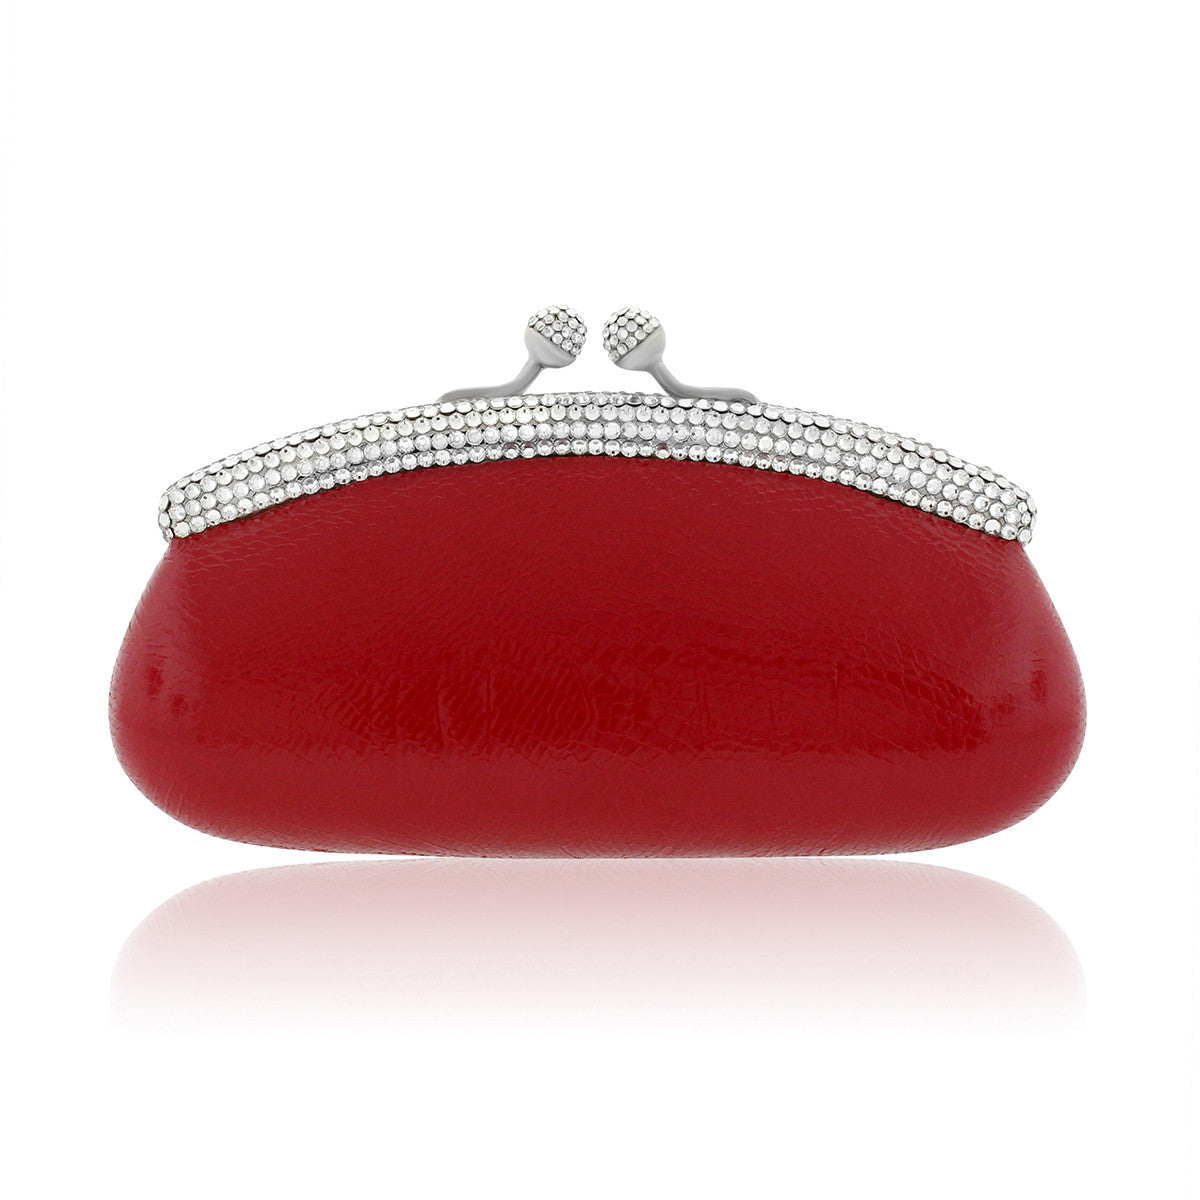 Red Patent Leather Evening Clutch w/ Swarovski Crystals